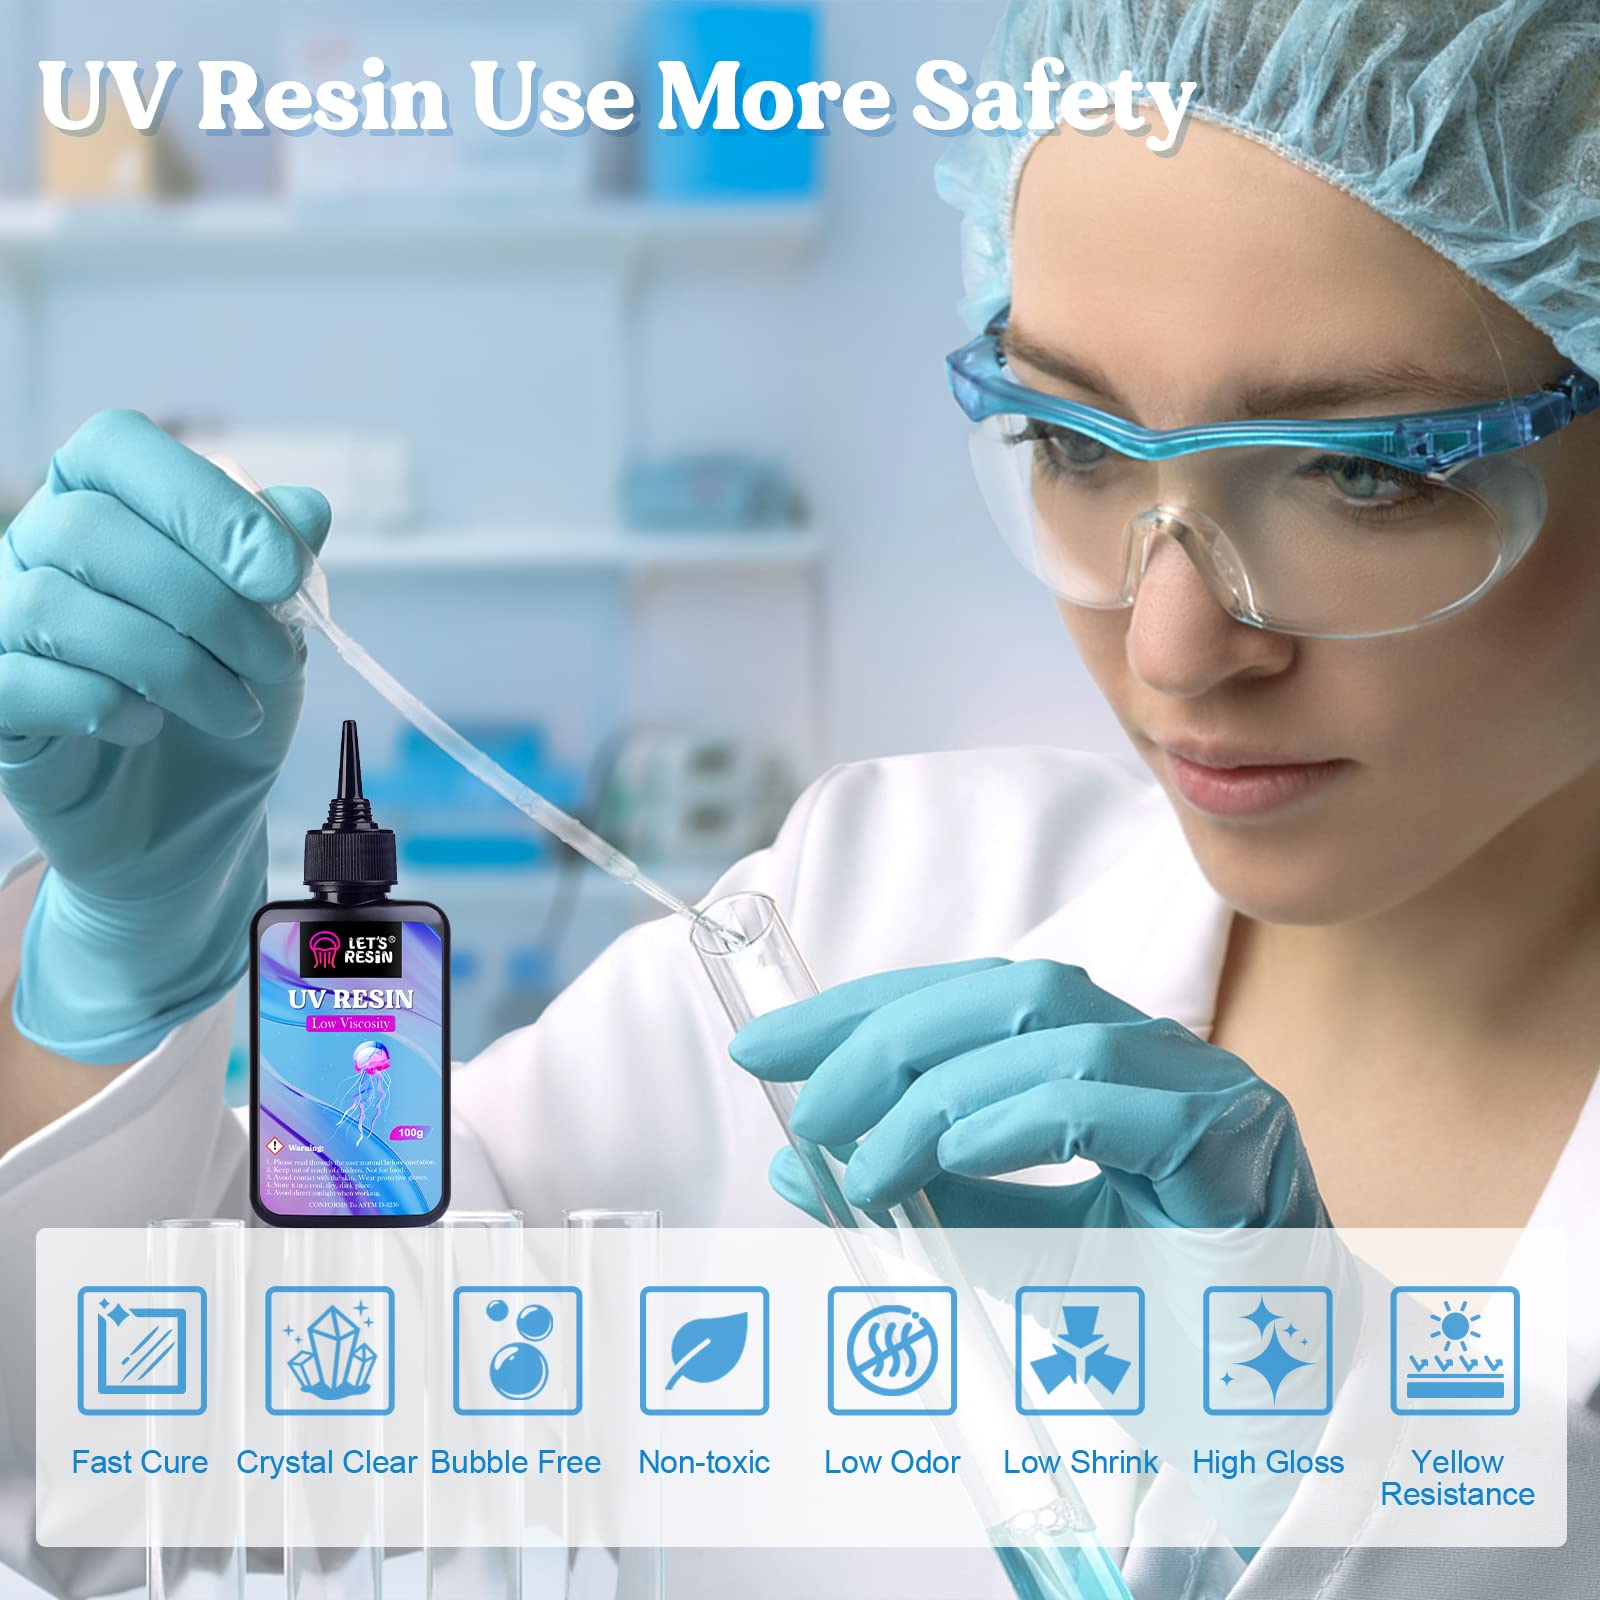 Let's Resin Green UV Epoxy Resin - 100g